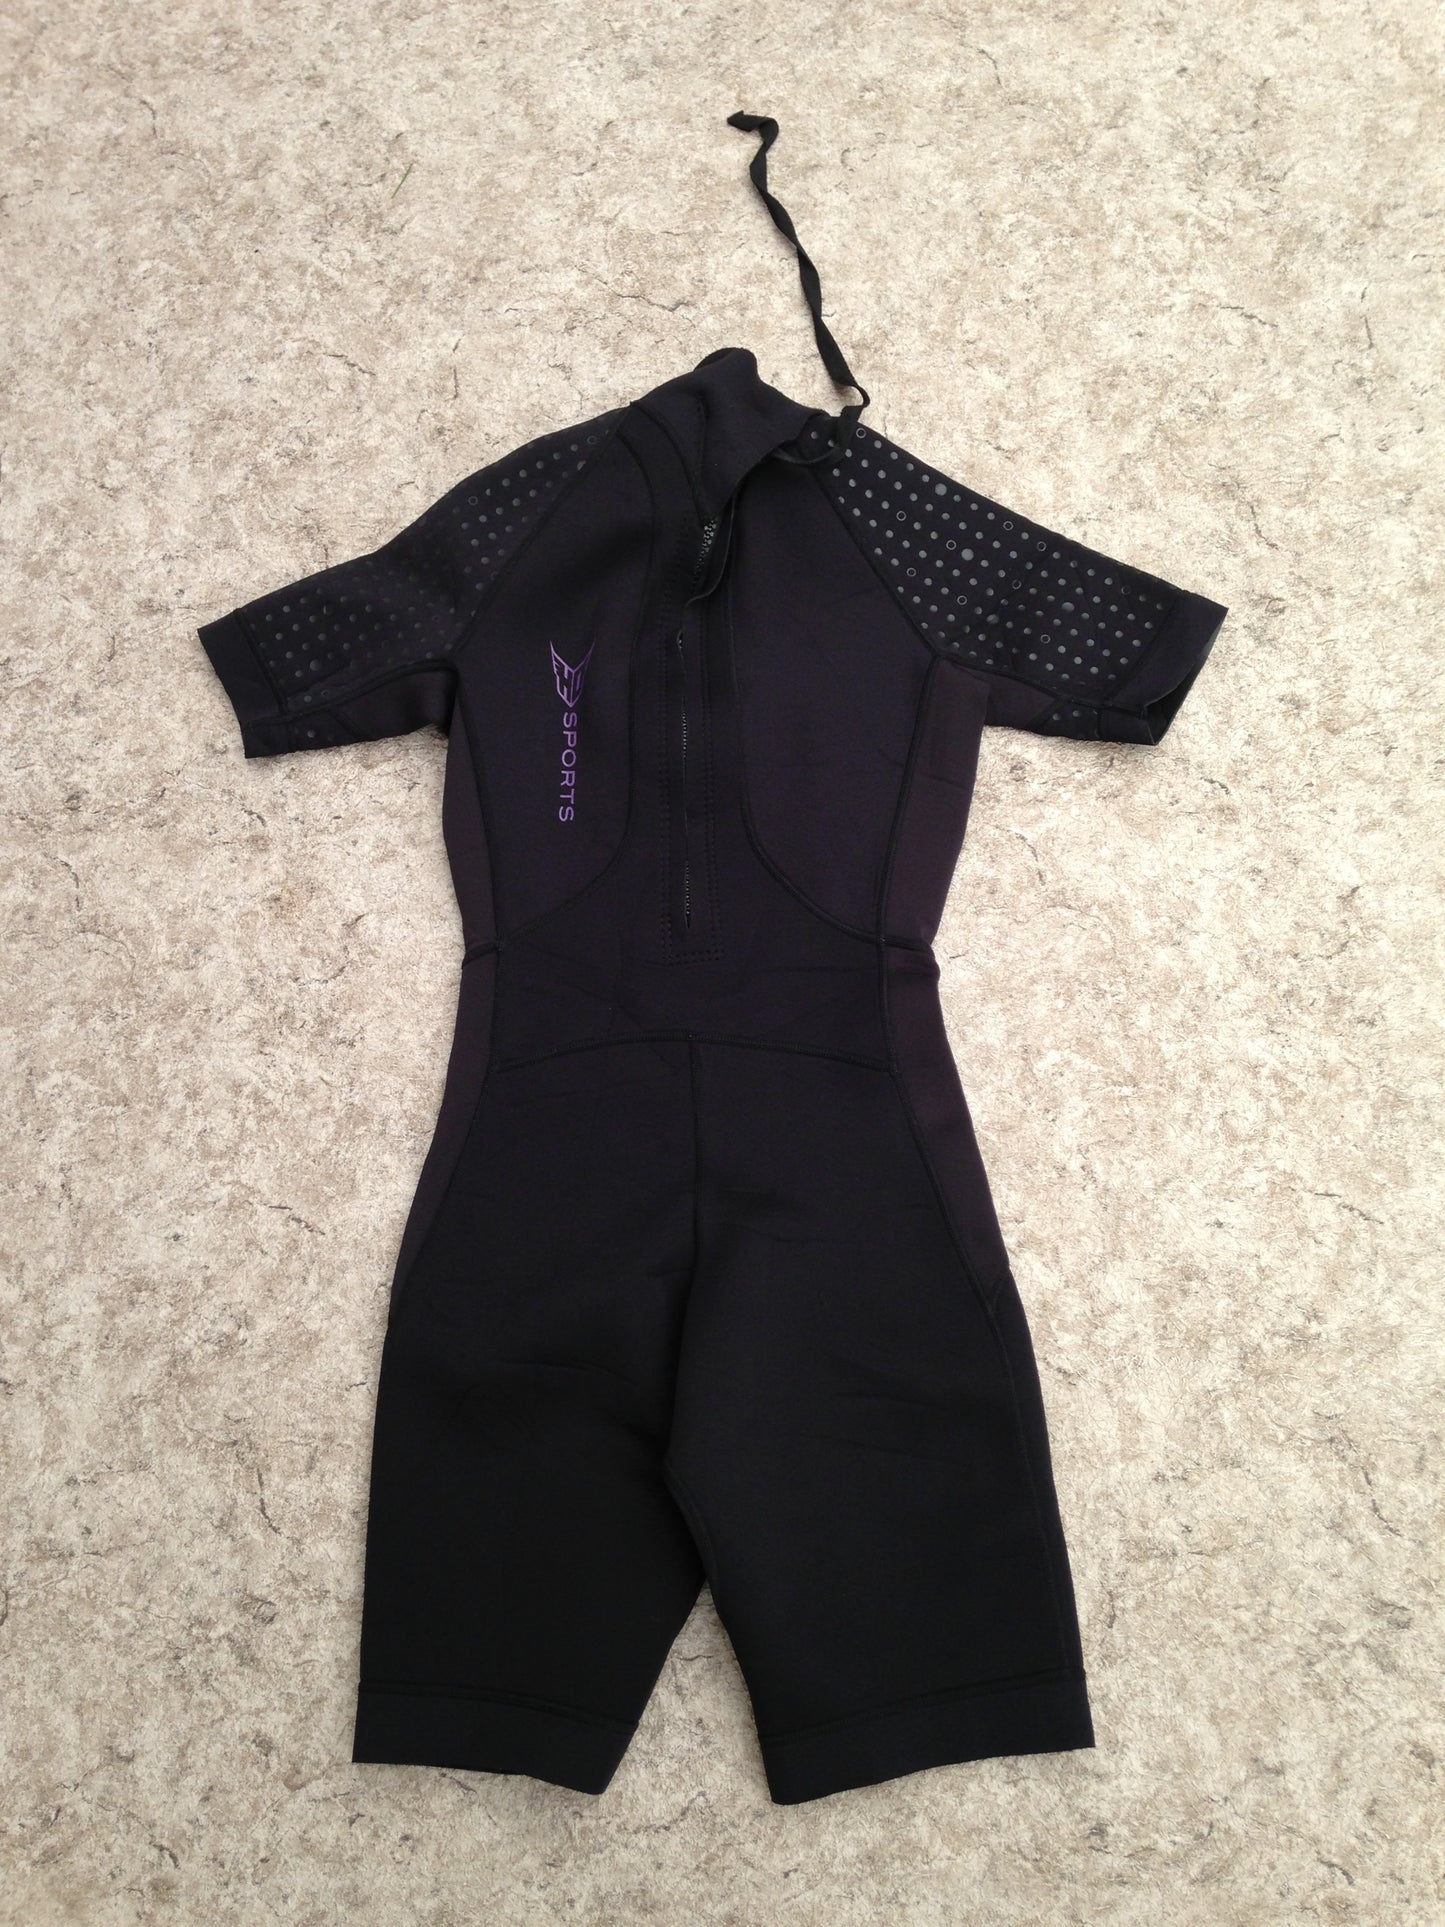 Wetsuit Ladies Size 5-6 HO Black Purple 2-3 mm Neoprene New Demo Model